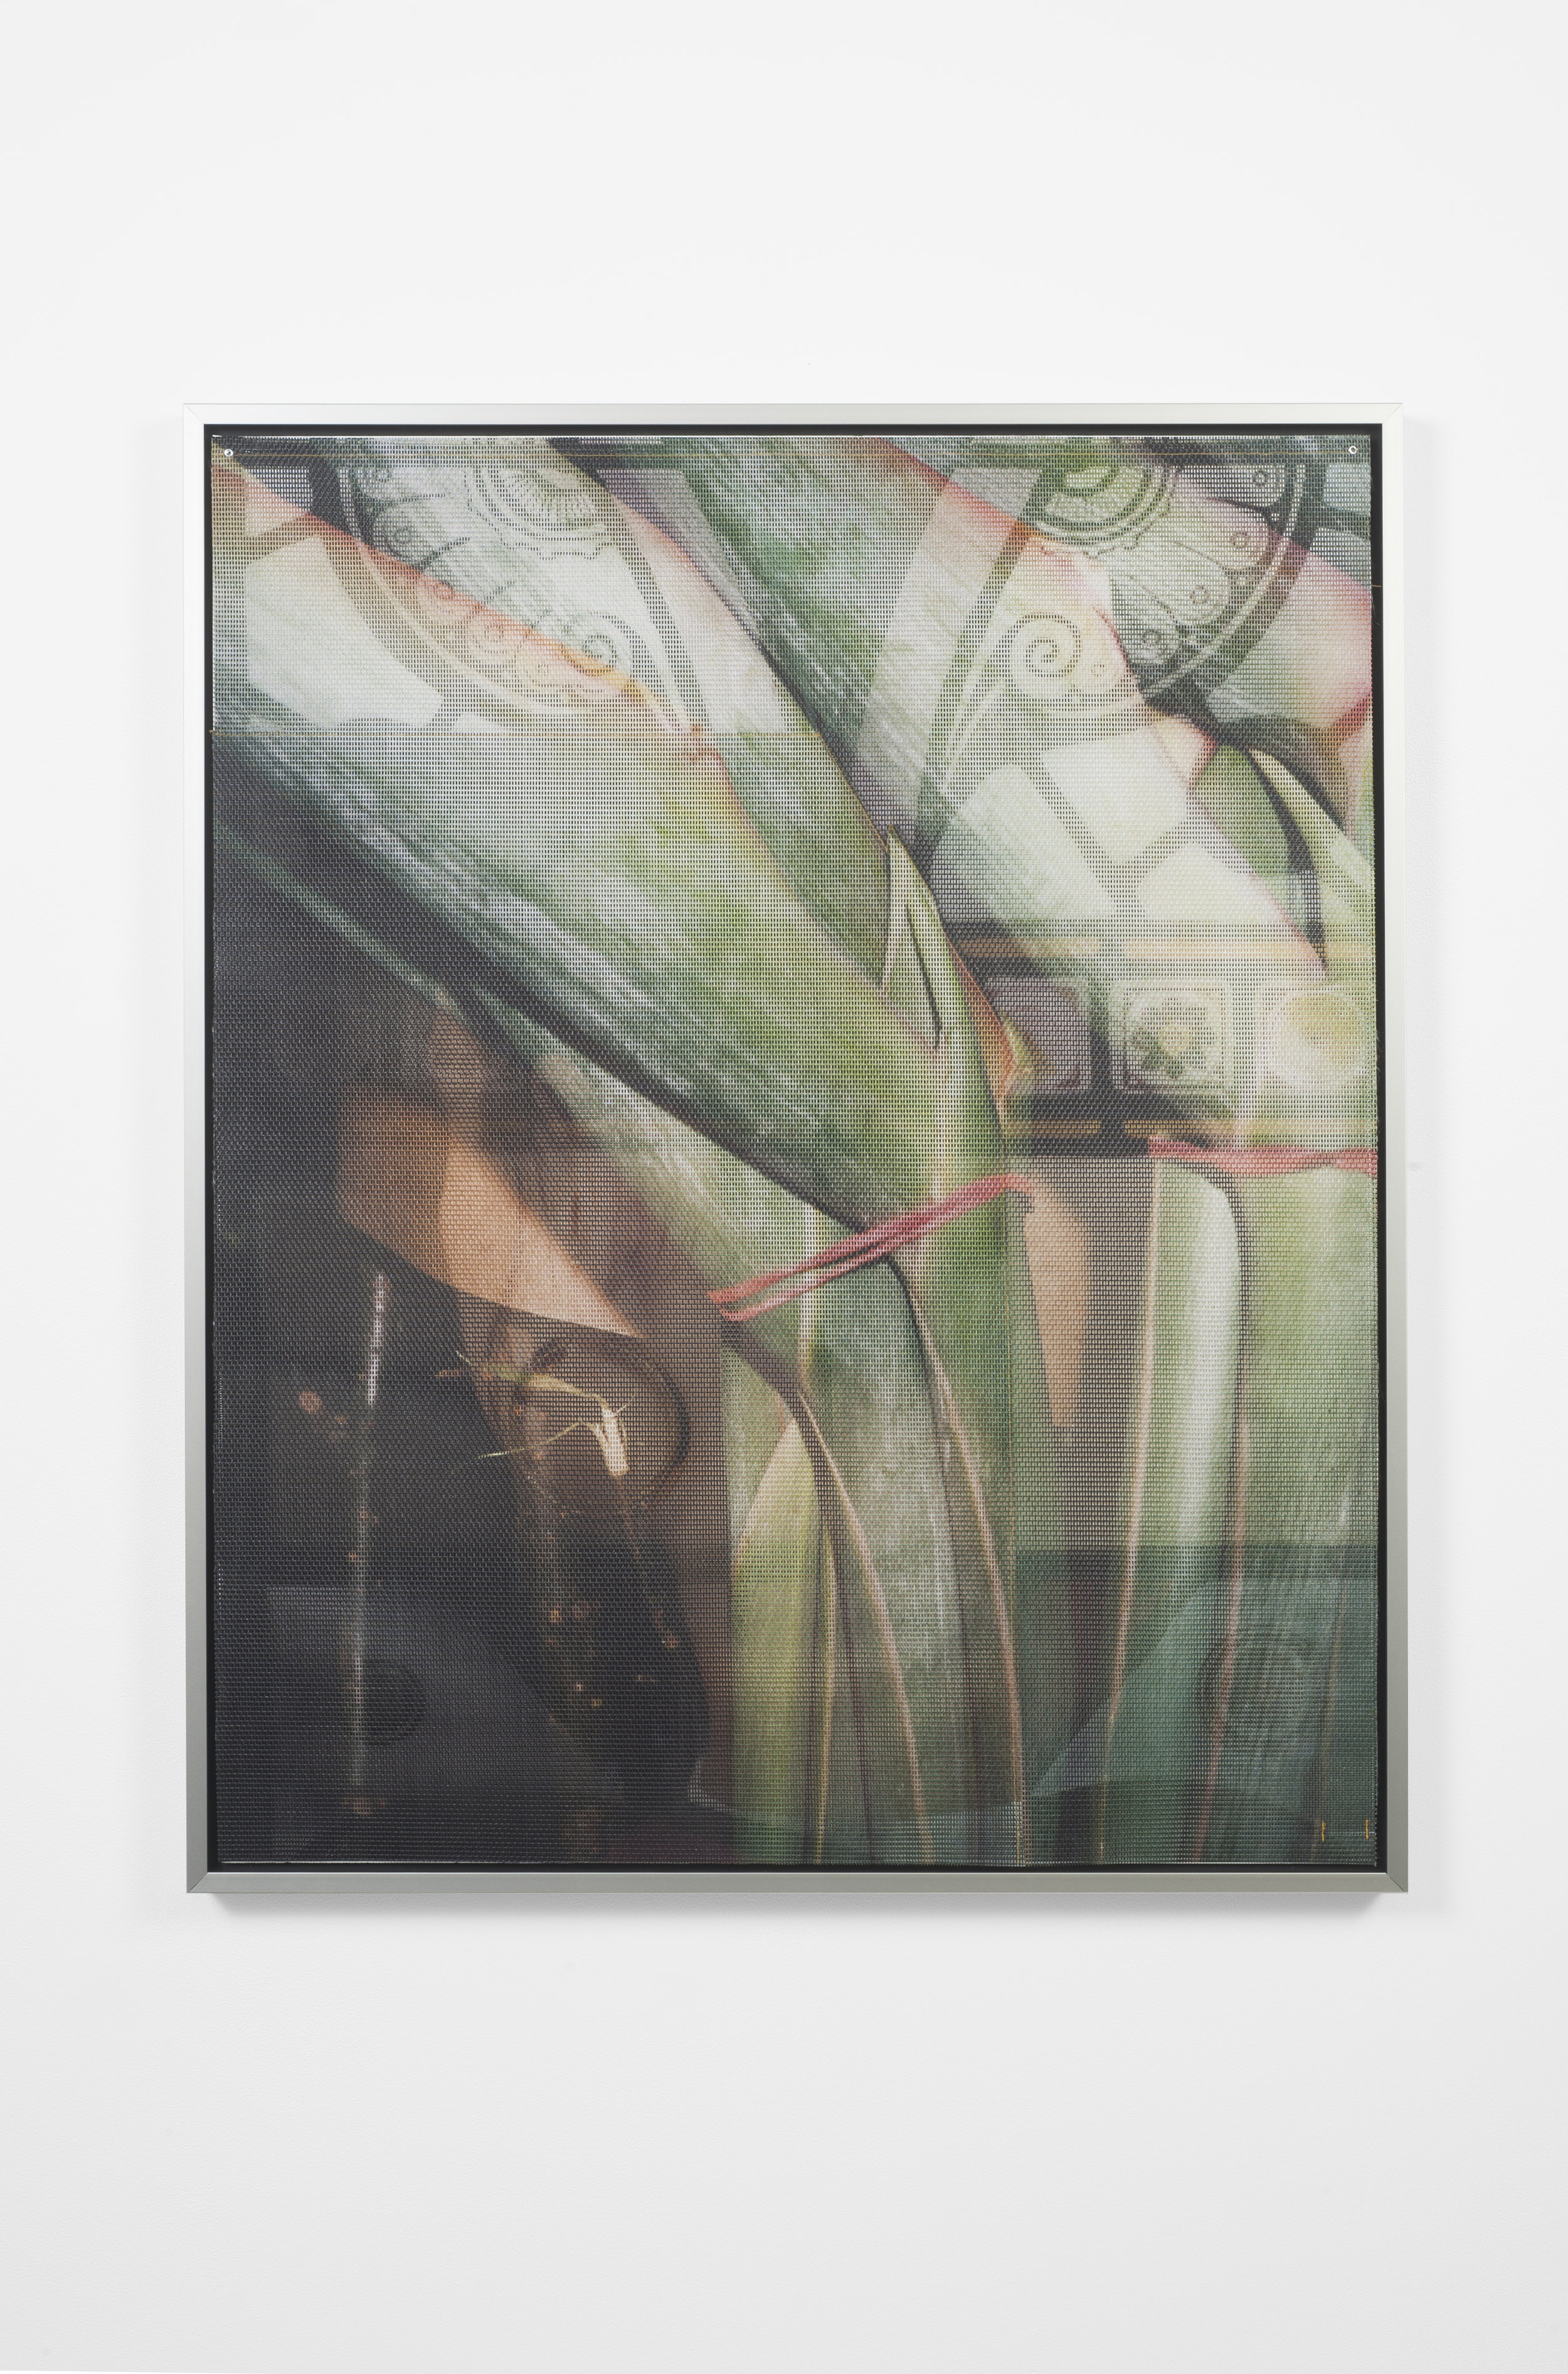  Ellie Hunter,  Untitled,  2019, UV inkjet print on vinyl mesh, 24.4 x 31.5 inches 